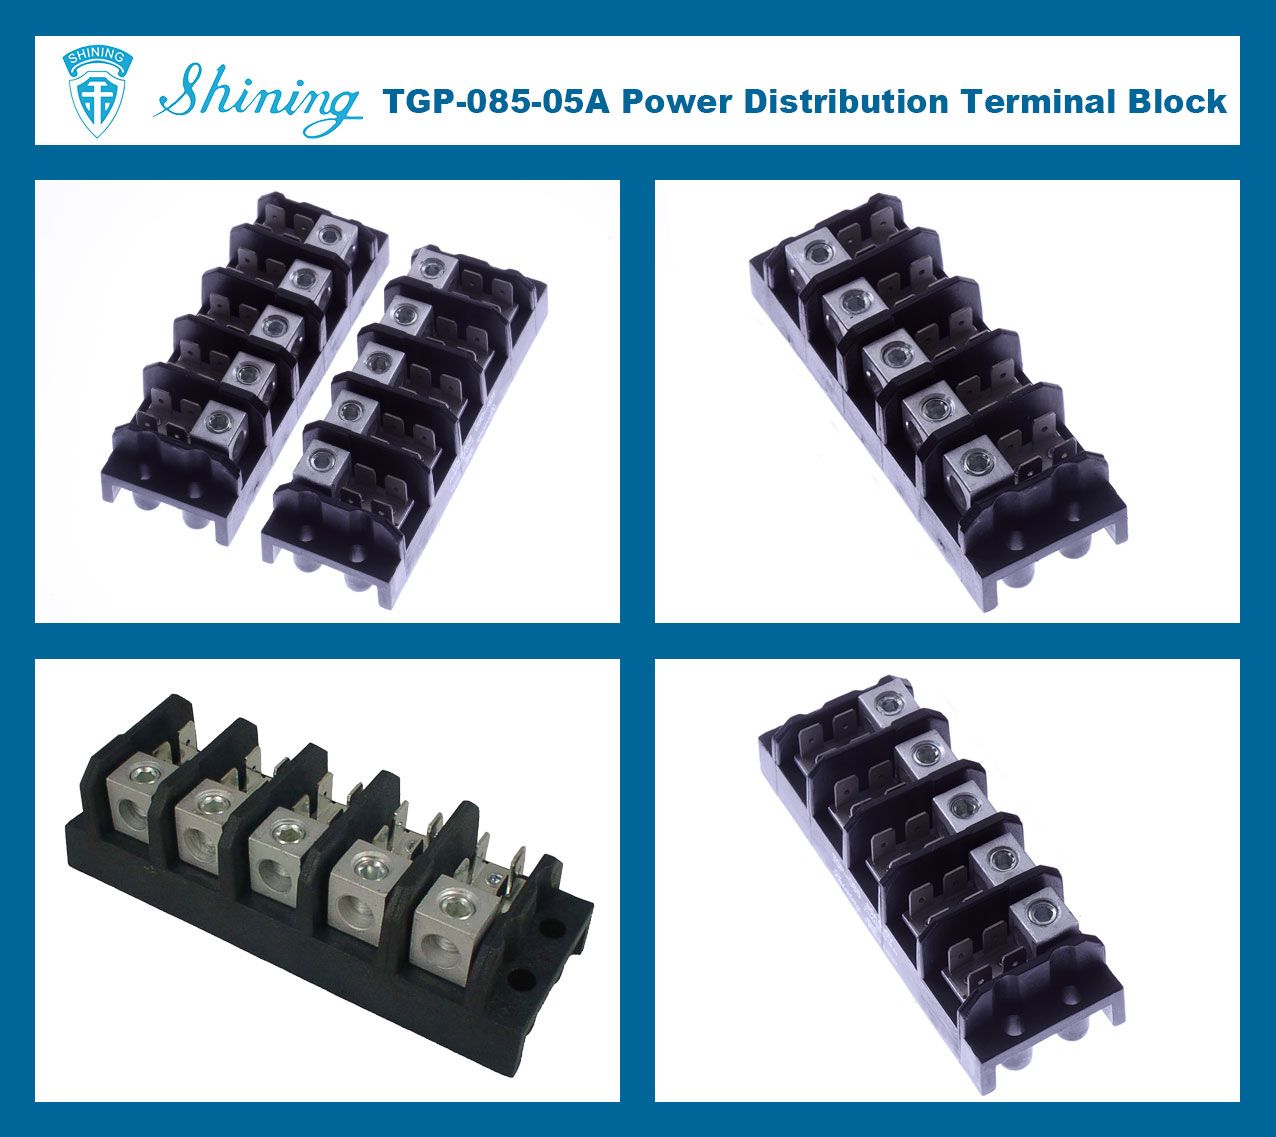 SHINING-TGP-085-05A 600V 85A 5 Pole Electrical Power Terminal Block